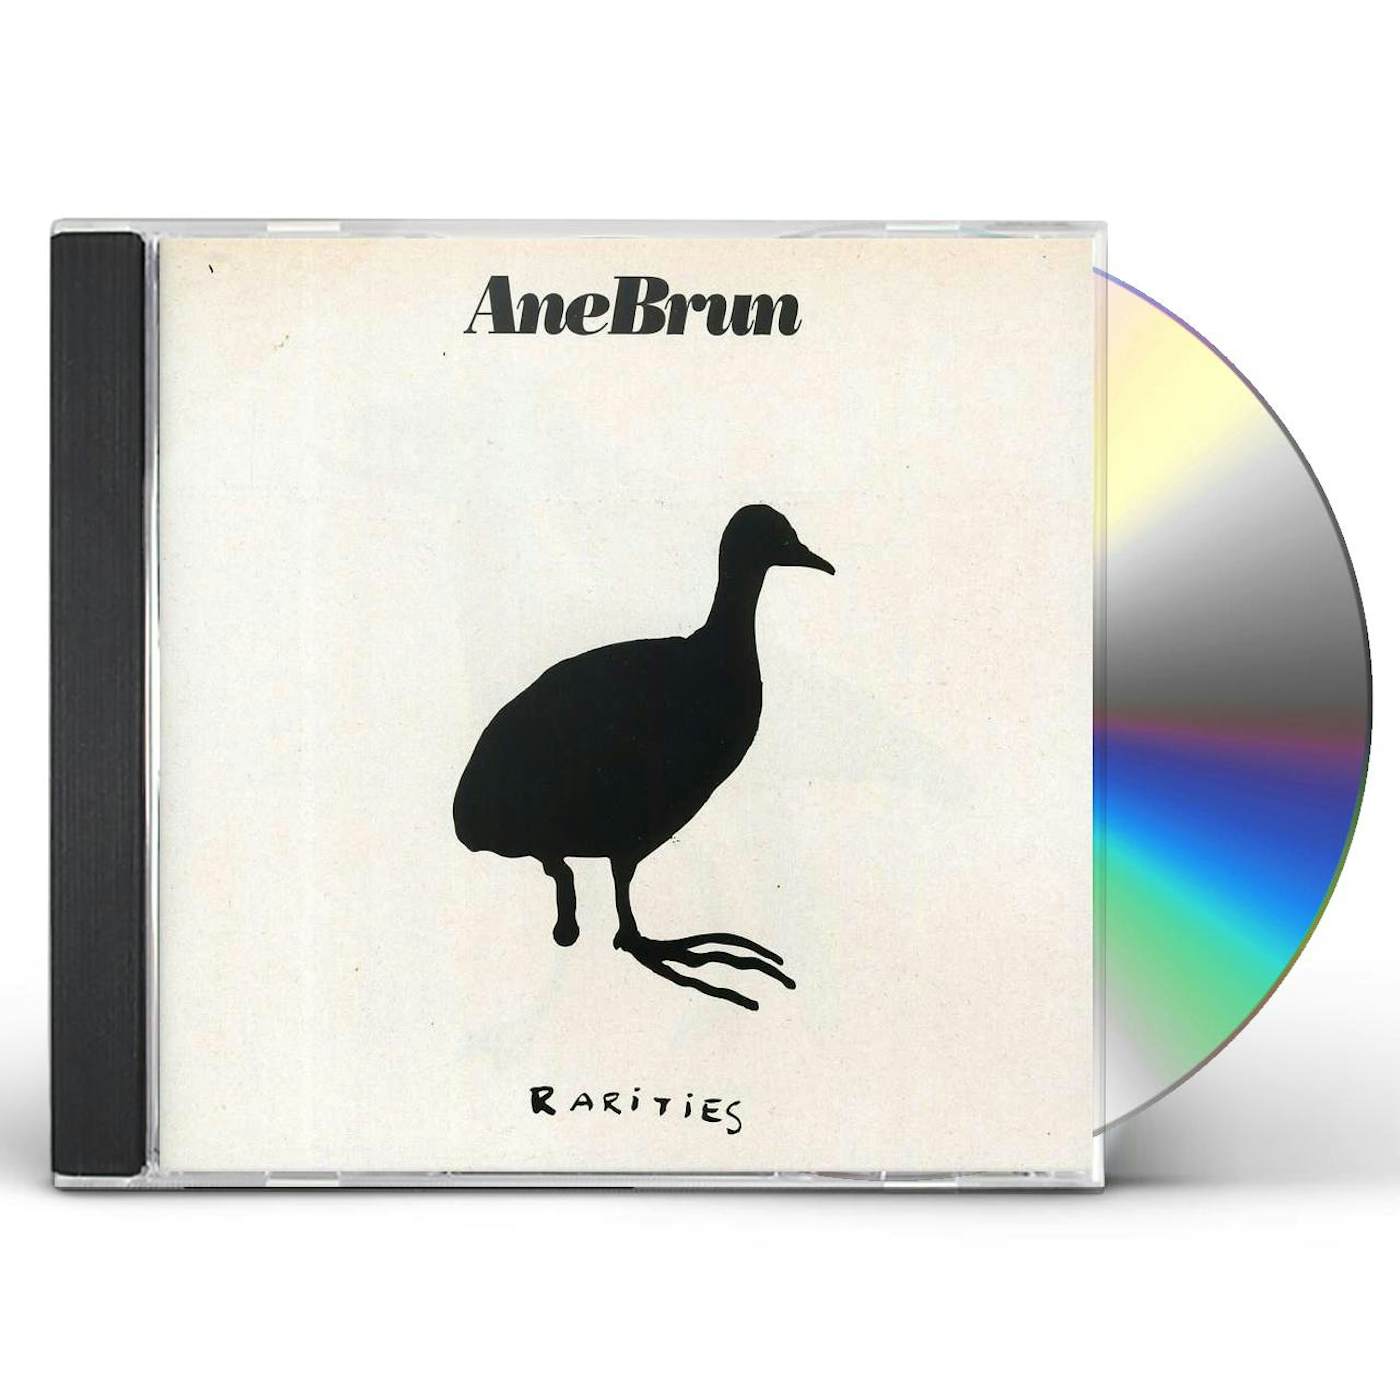 Ane Brun RARITIES CD